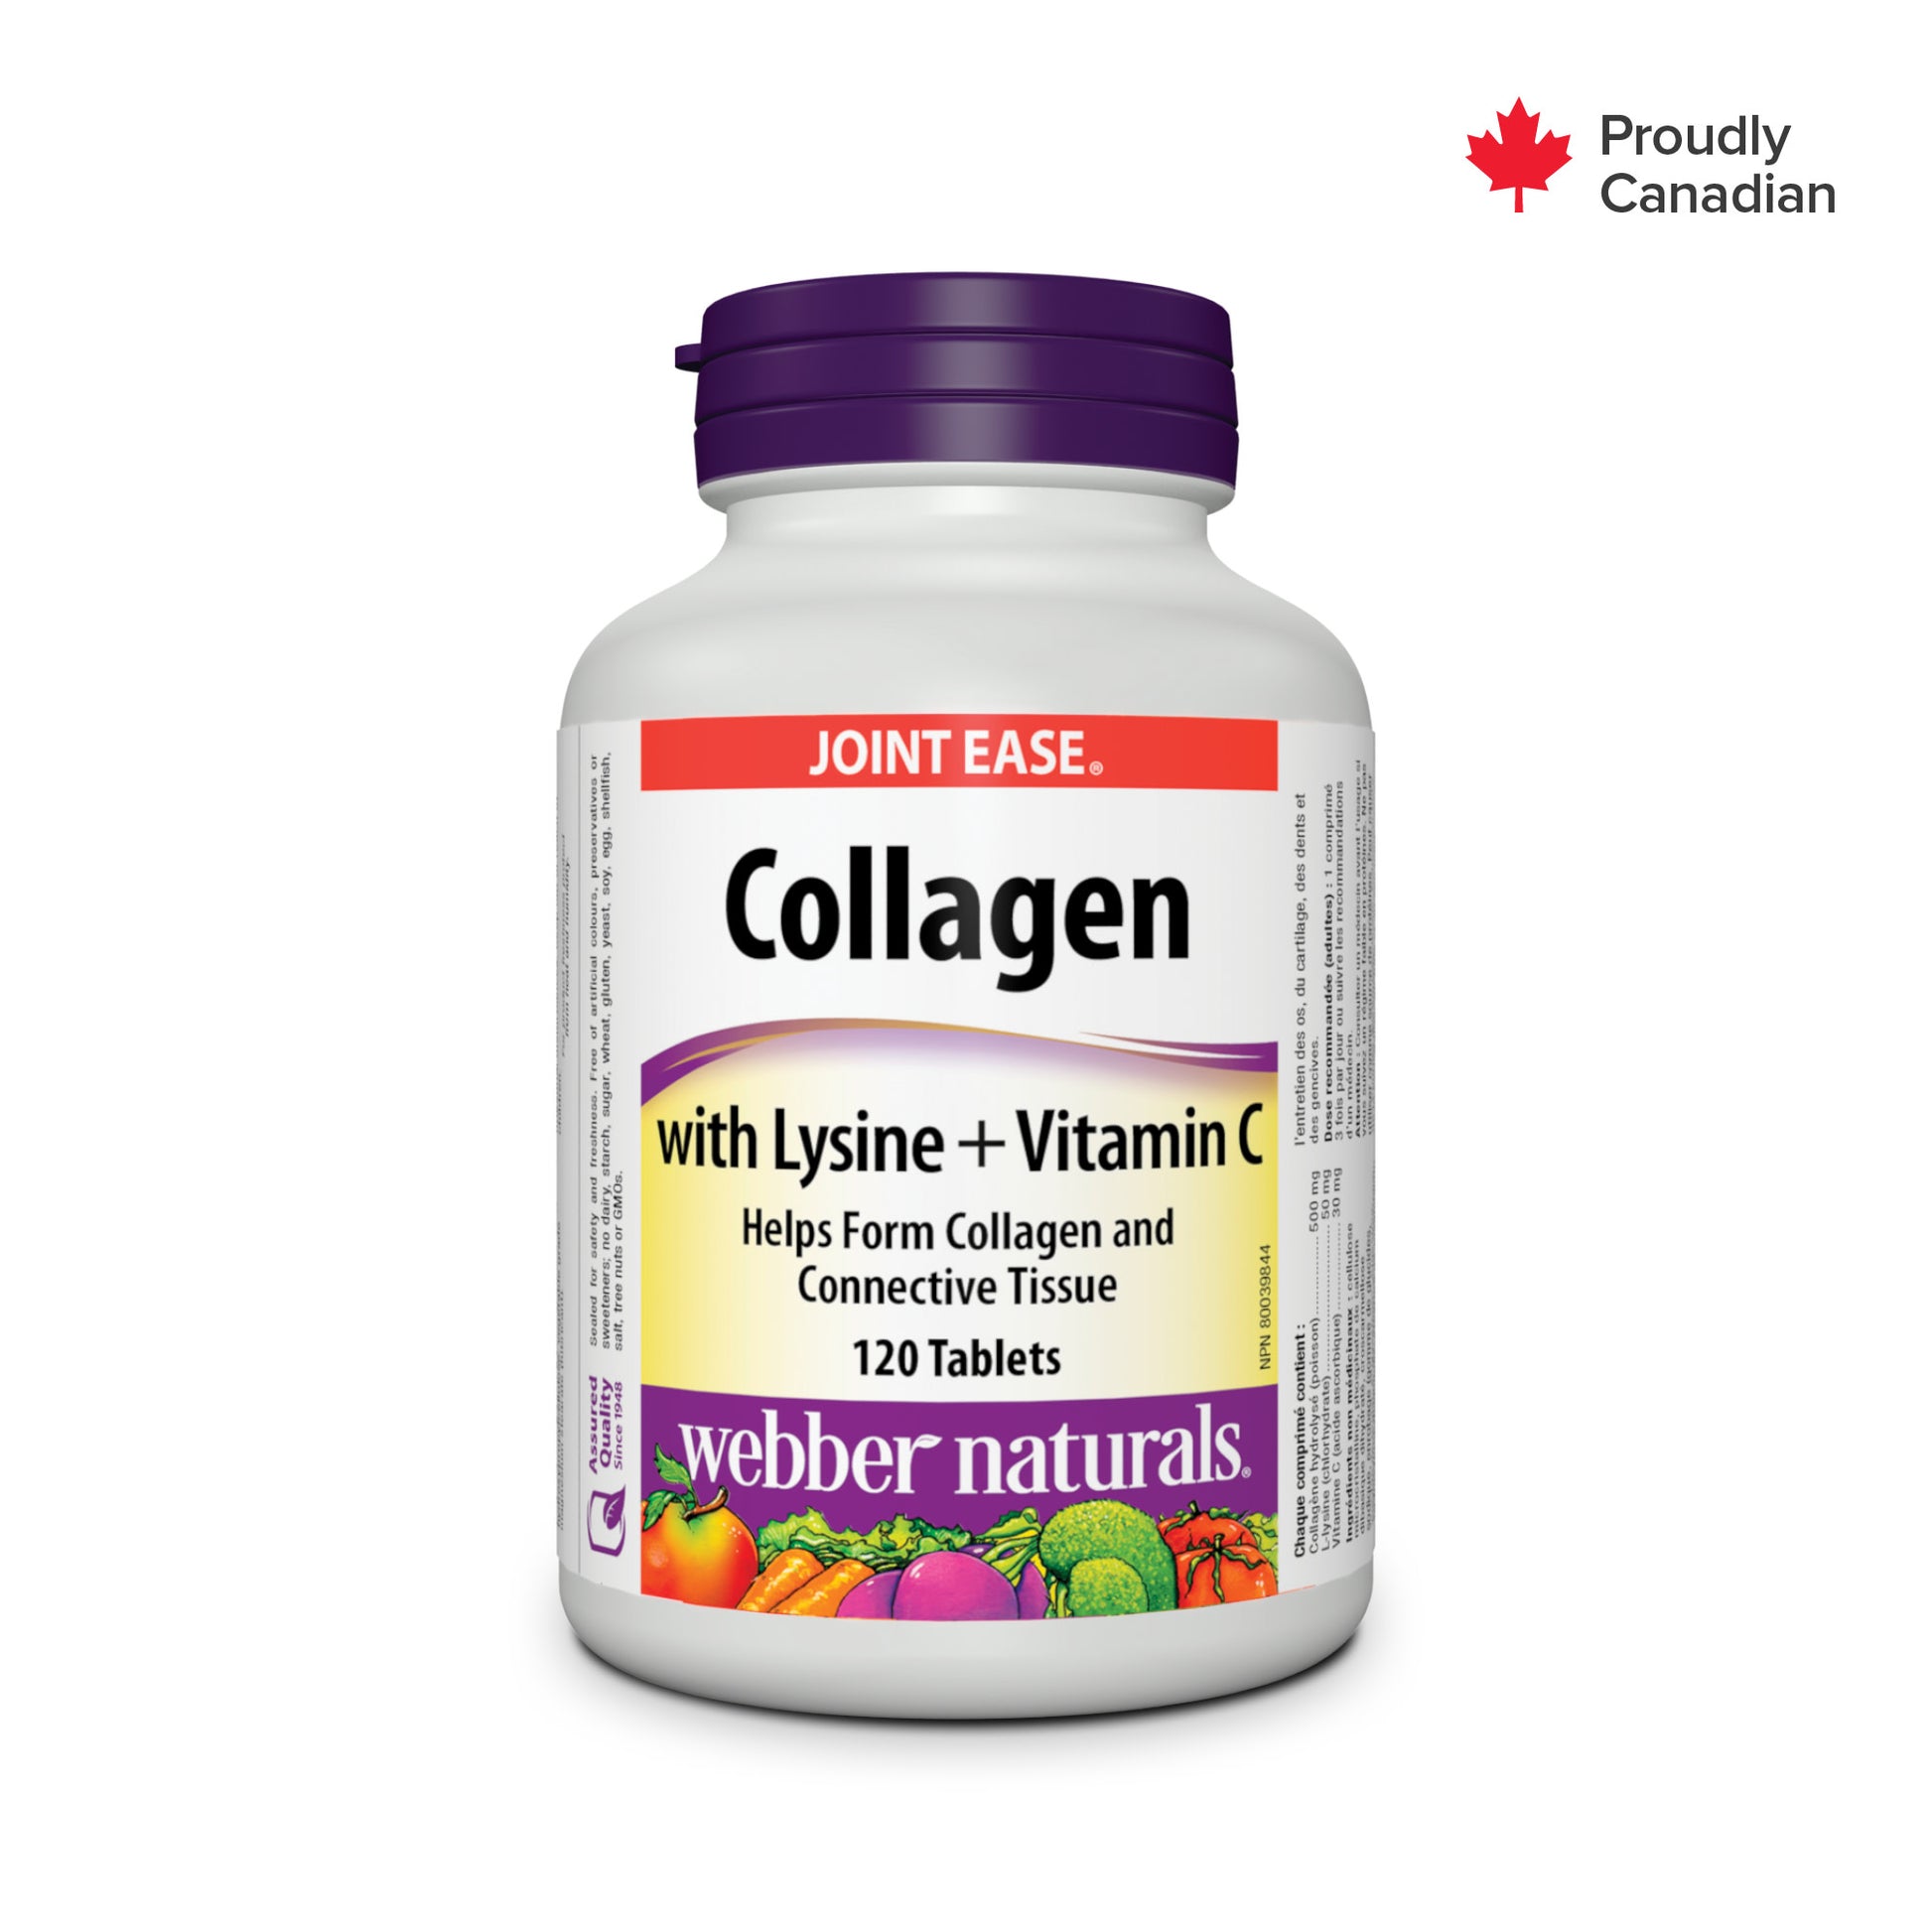 Collagène avec Lysine + Vitamine C for Webber Naturals|v|hi-res|WN3386